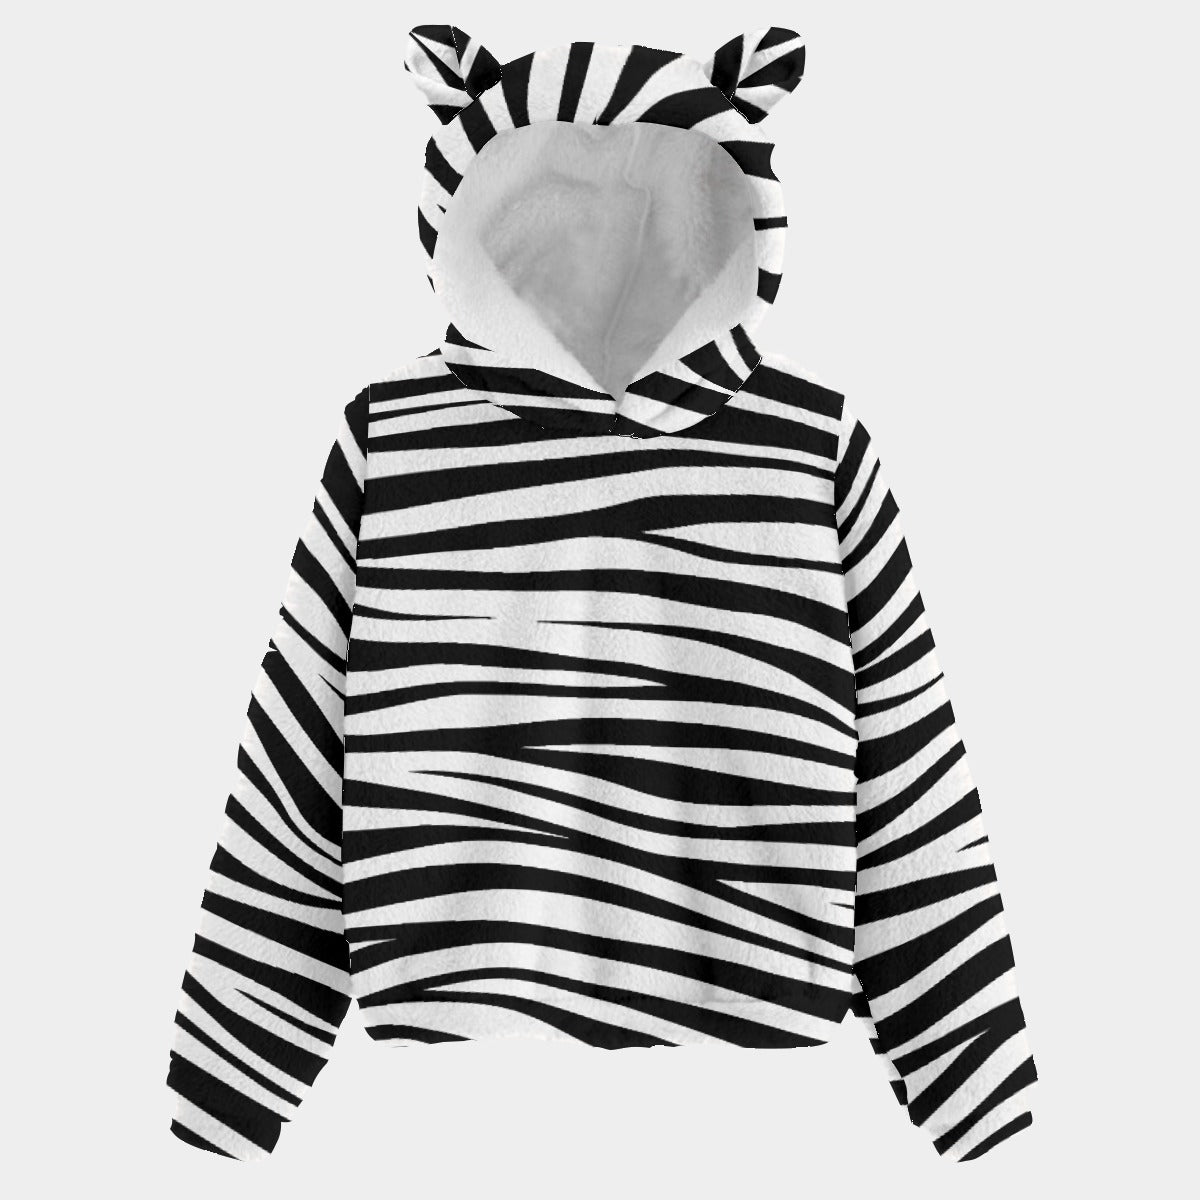 Azeeda 'Tiger' Children's Hoodie/Hooded Sweater 7-8 Years (KO00022838)